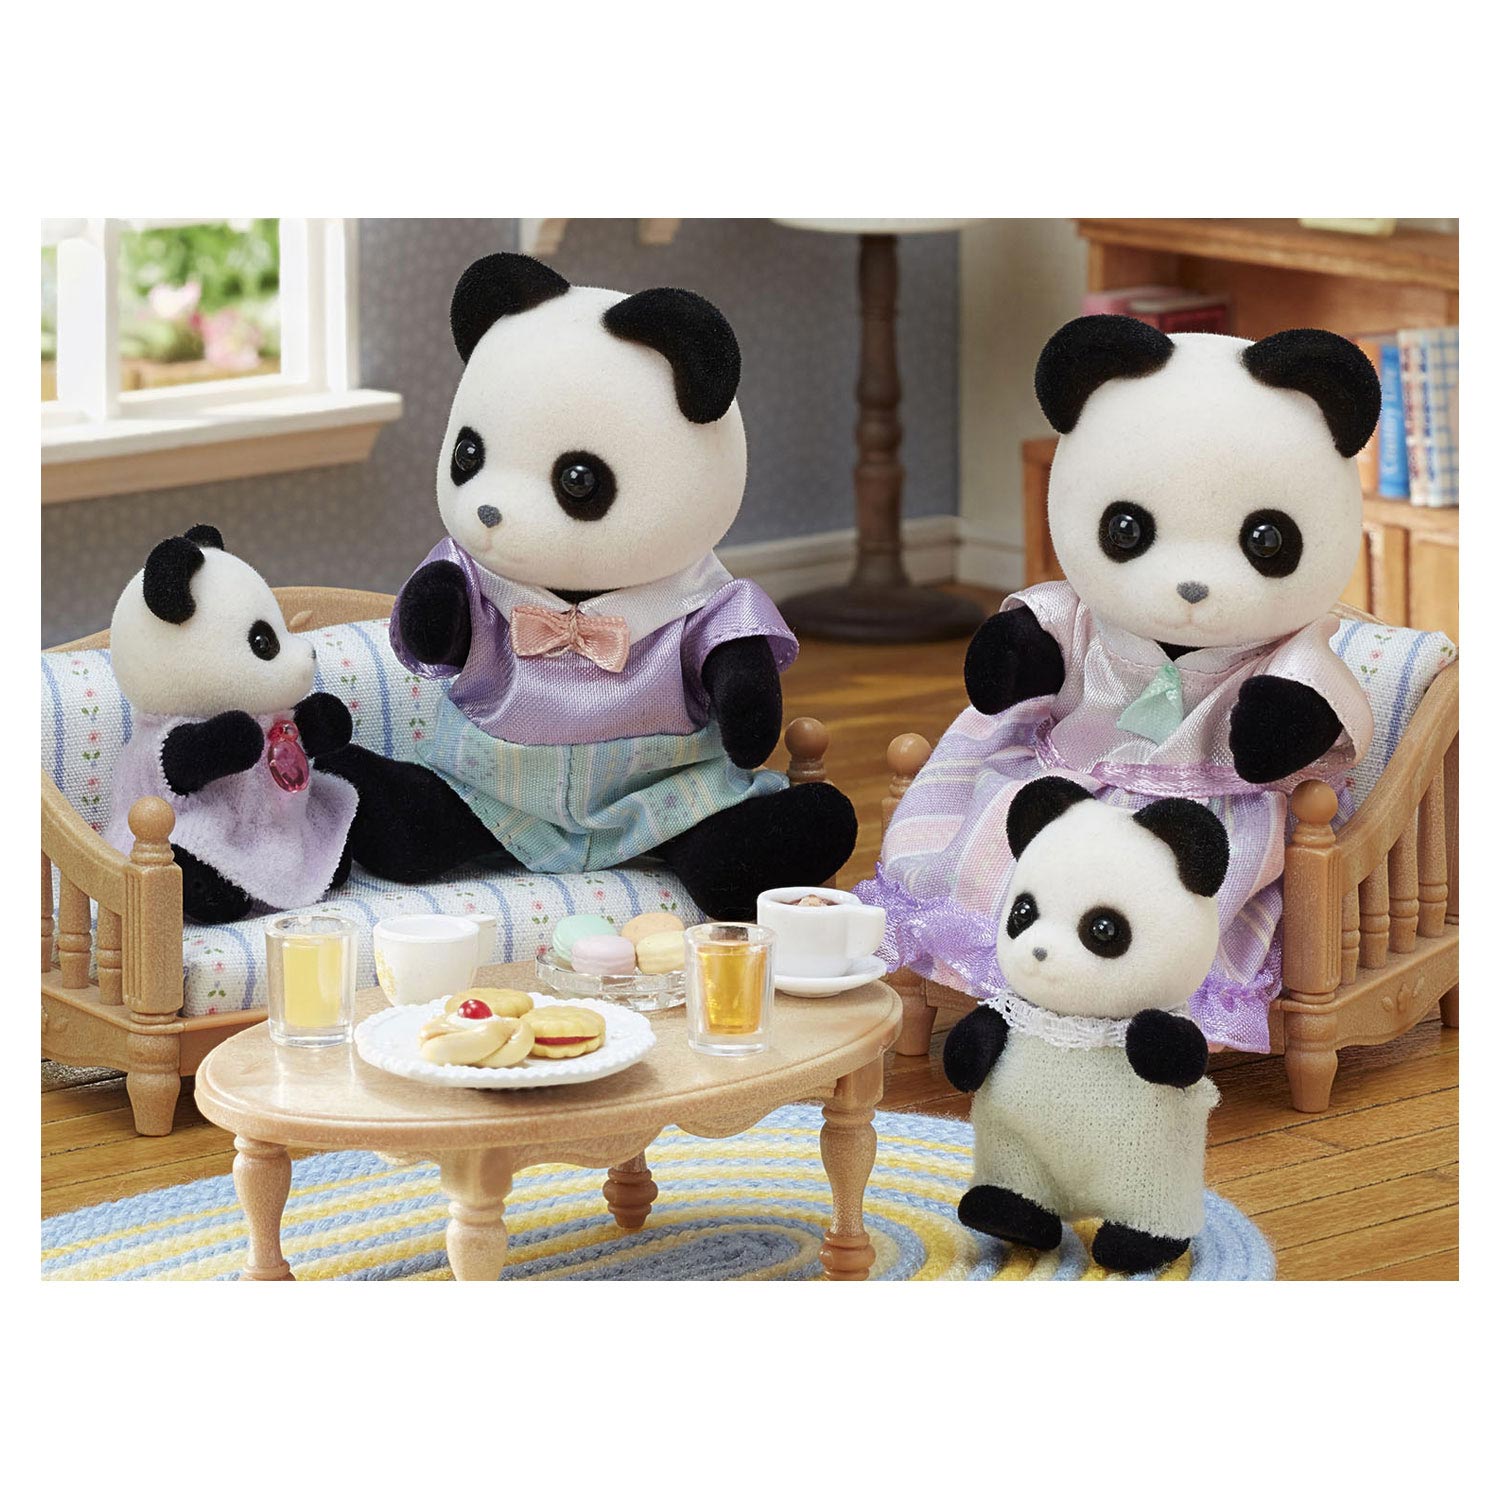 Sylvanian Families 5529 Familie Panda